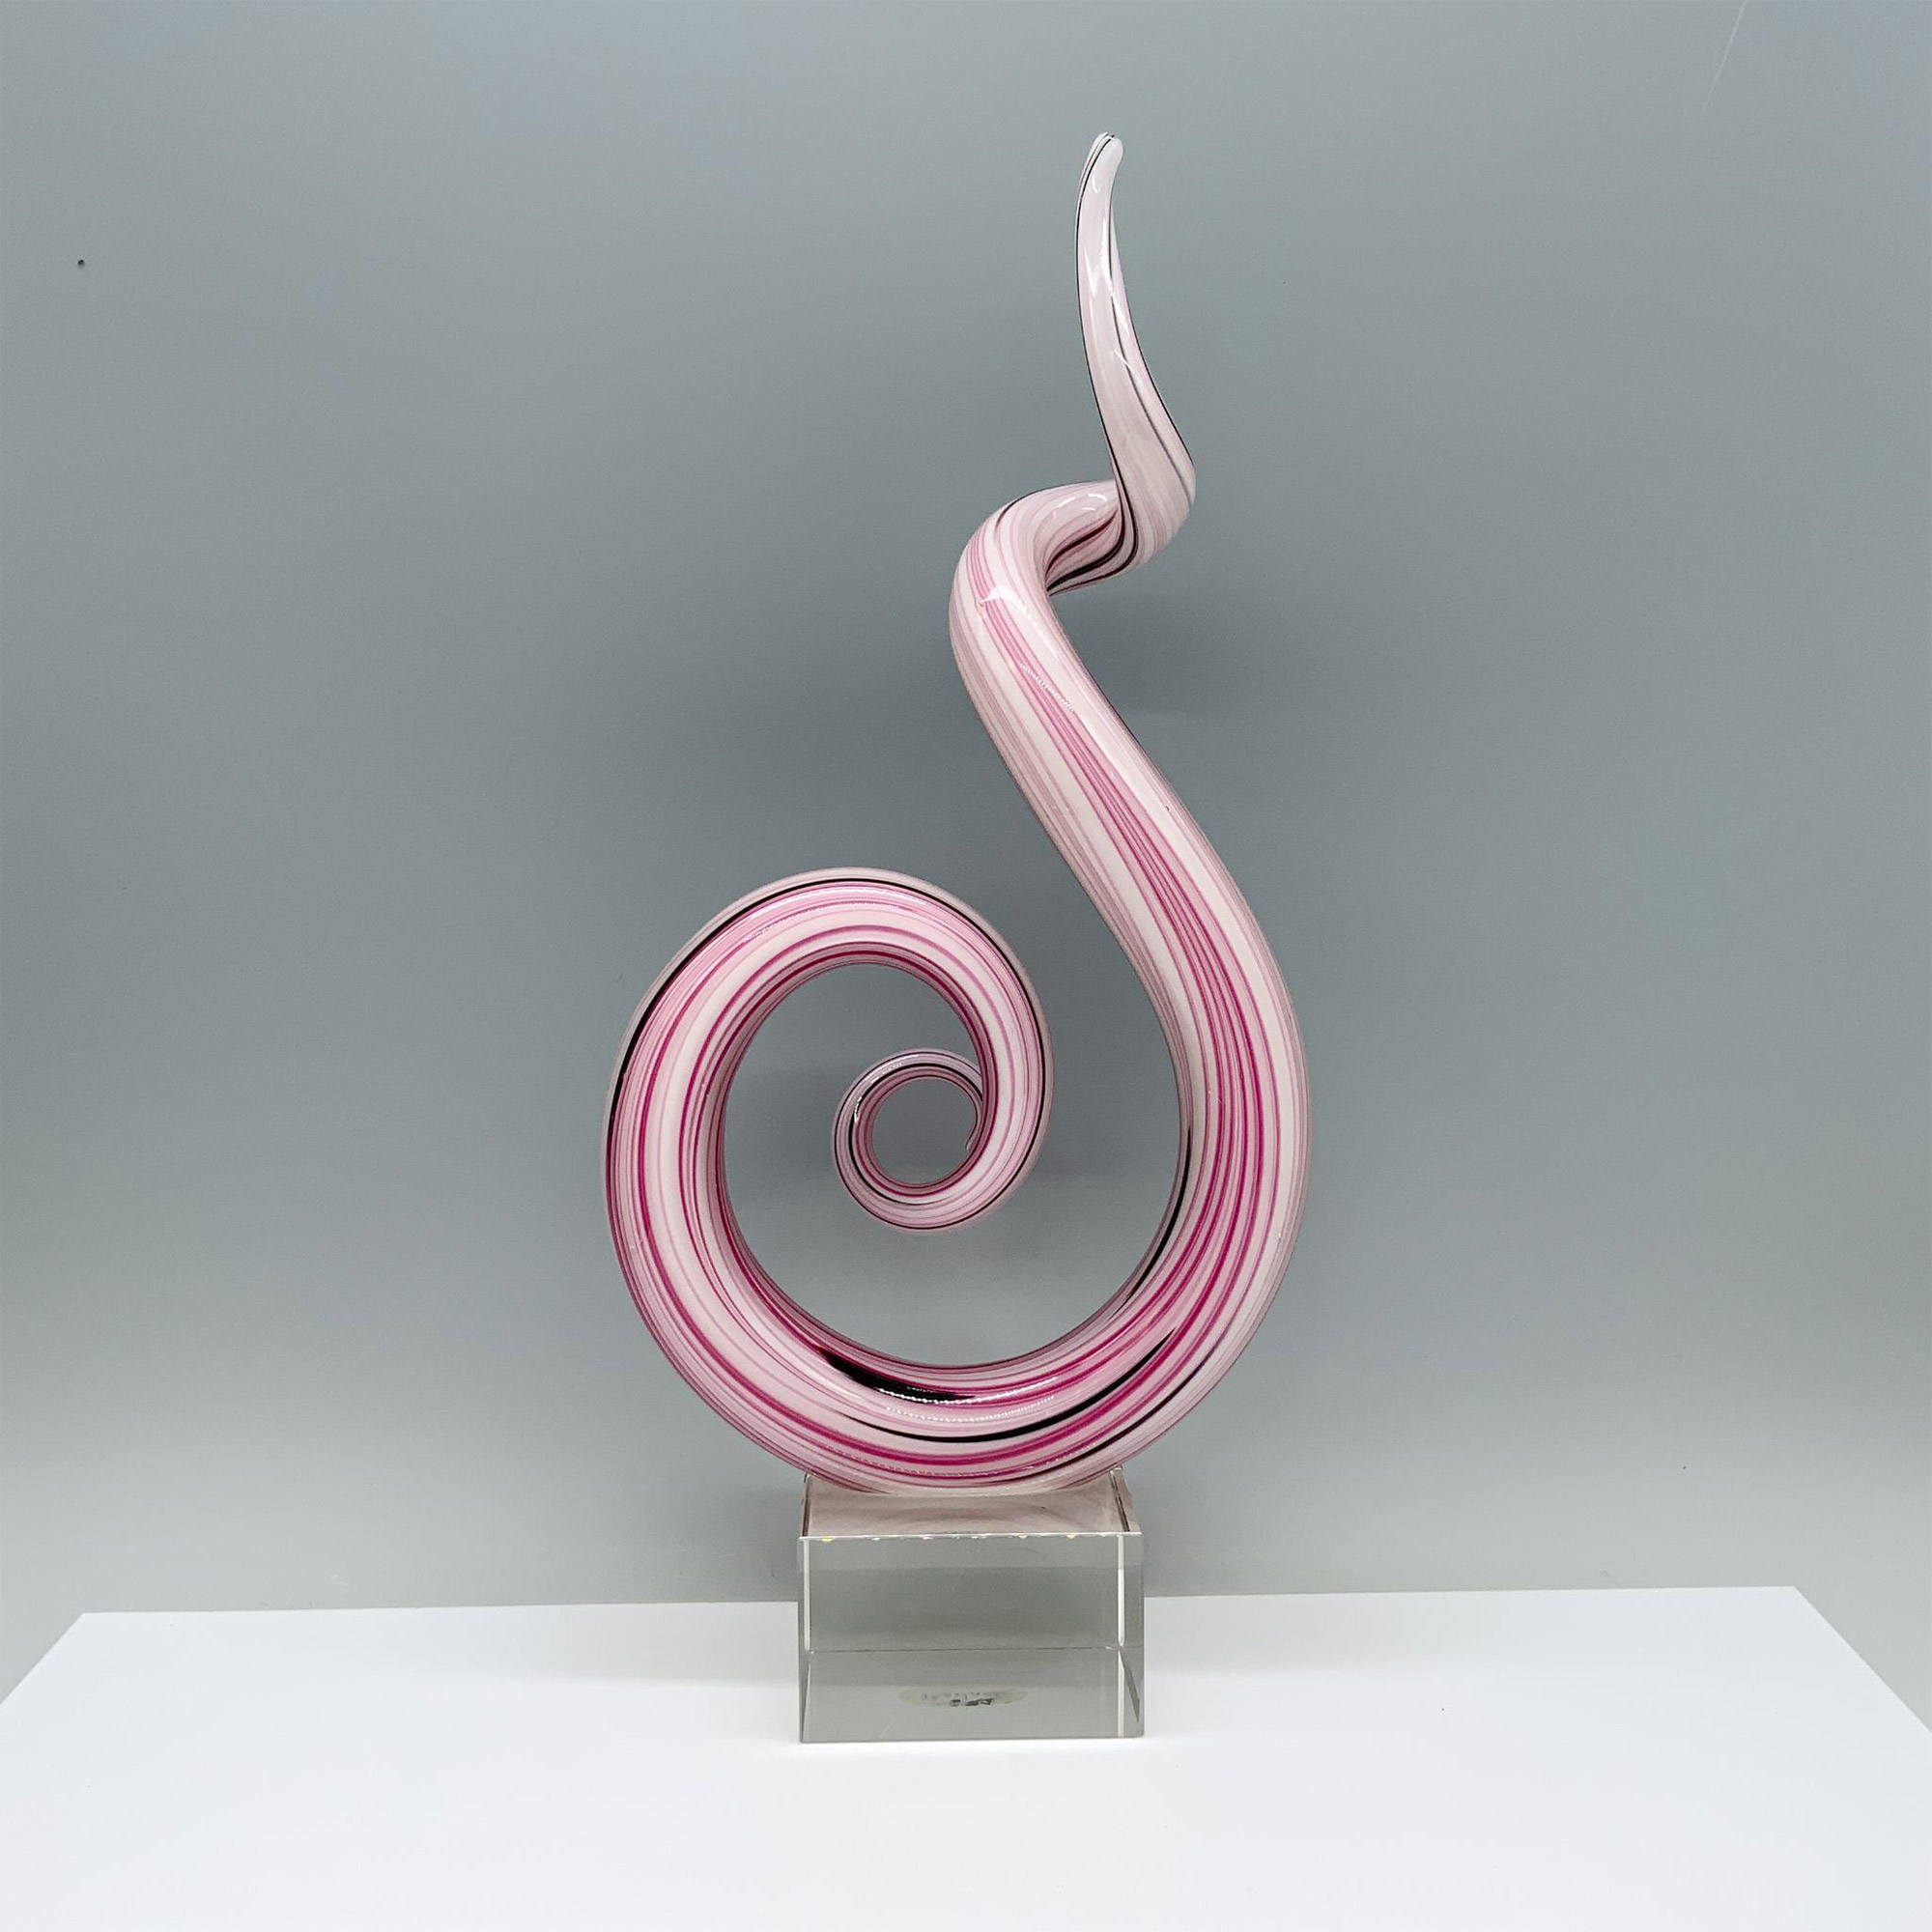 Badash Spiral Art Glass Sculpture - Image 2 of 3